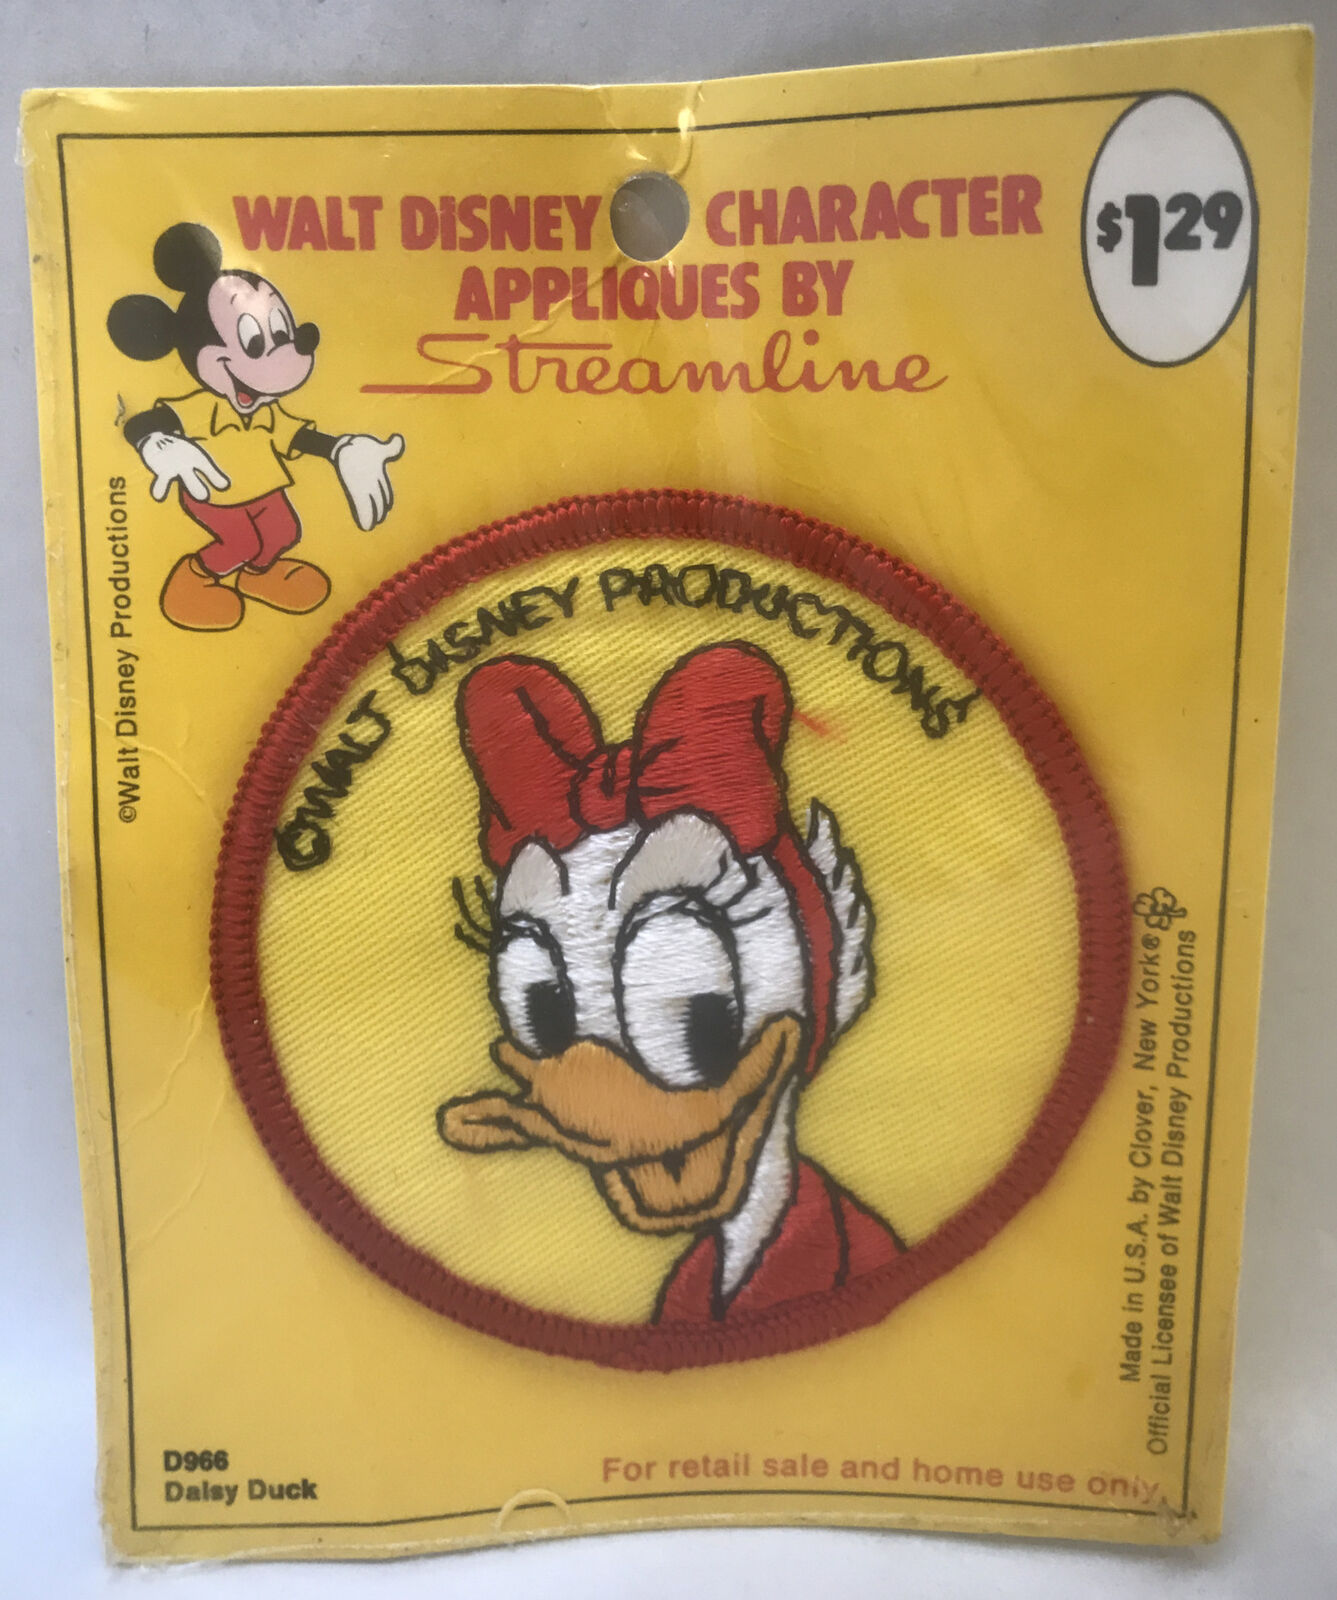 Walt Disney appliques Daisy Duck